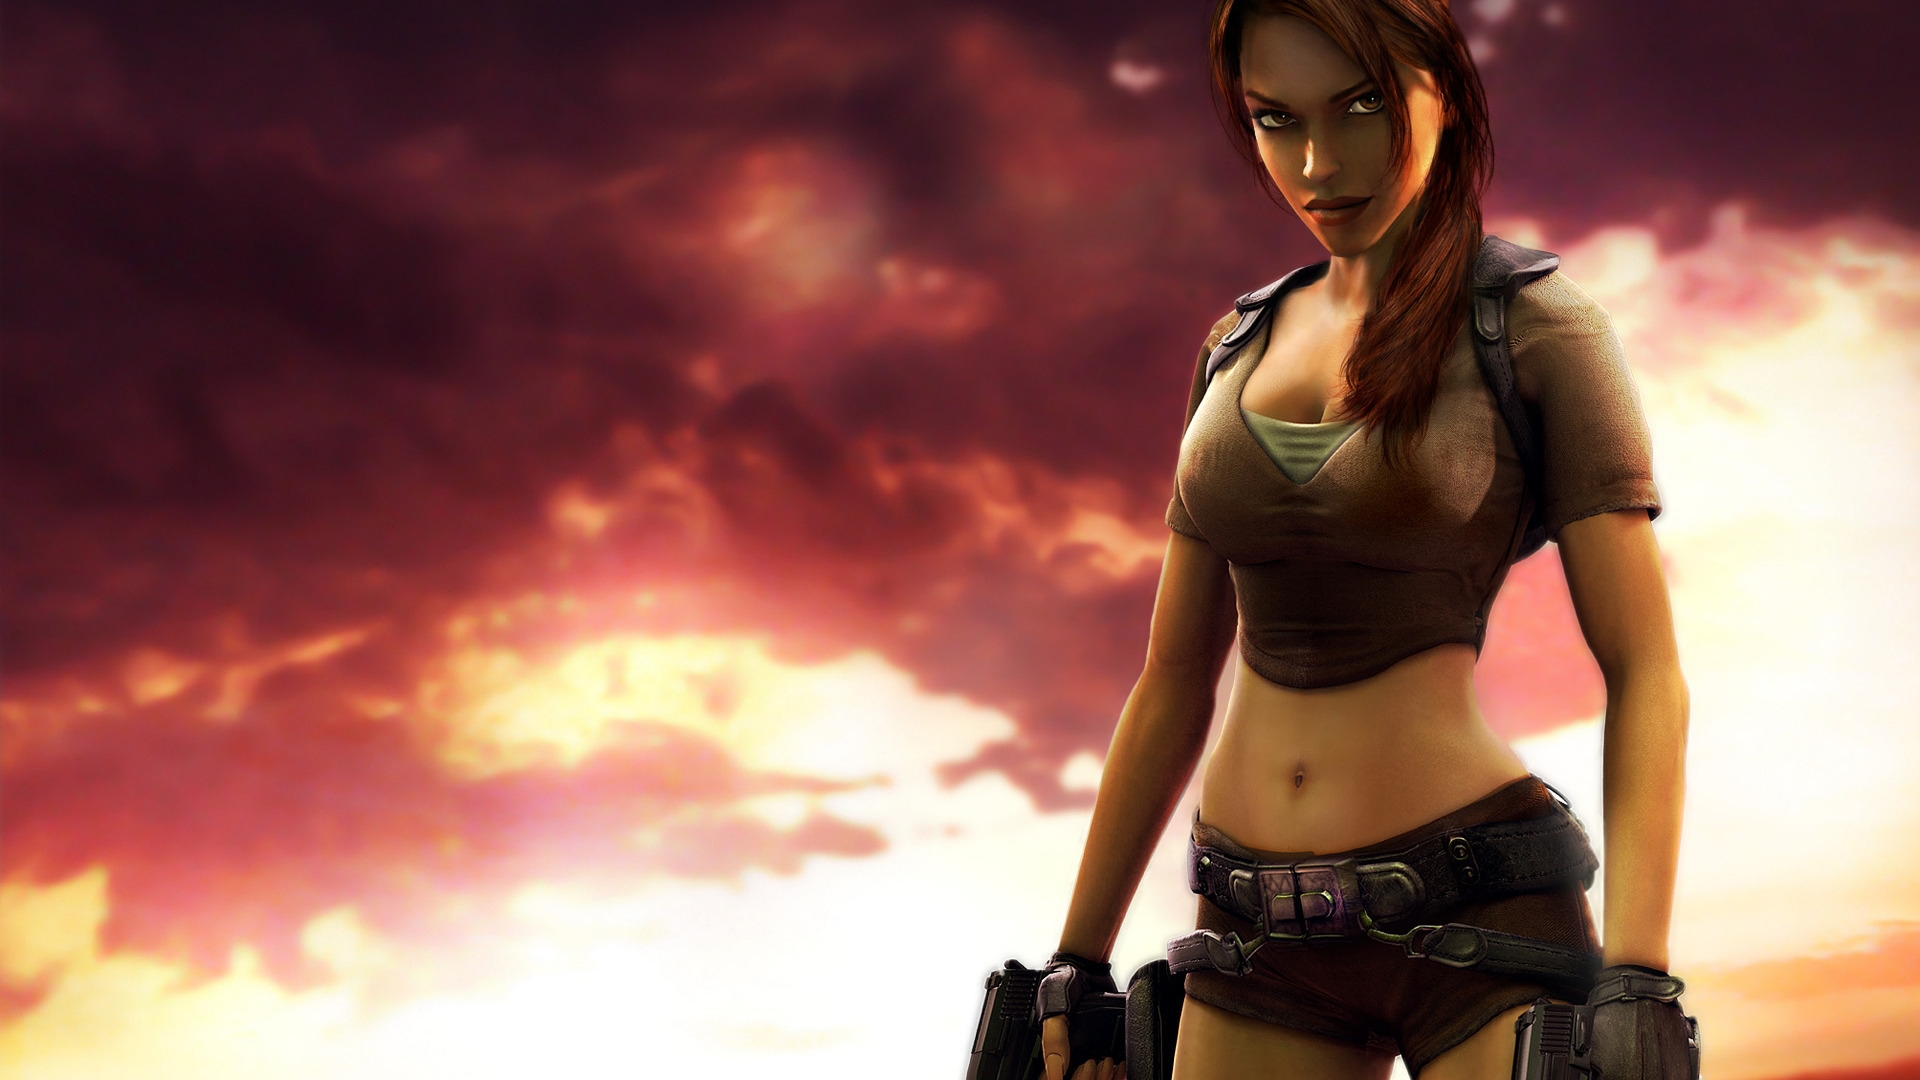 Lara Croft for 1920 x 1080 HDTV 1080p resolution